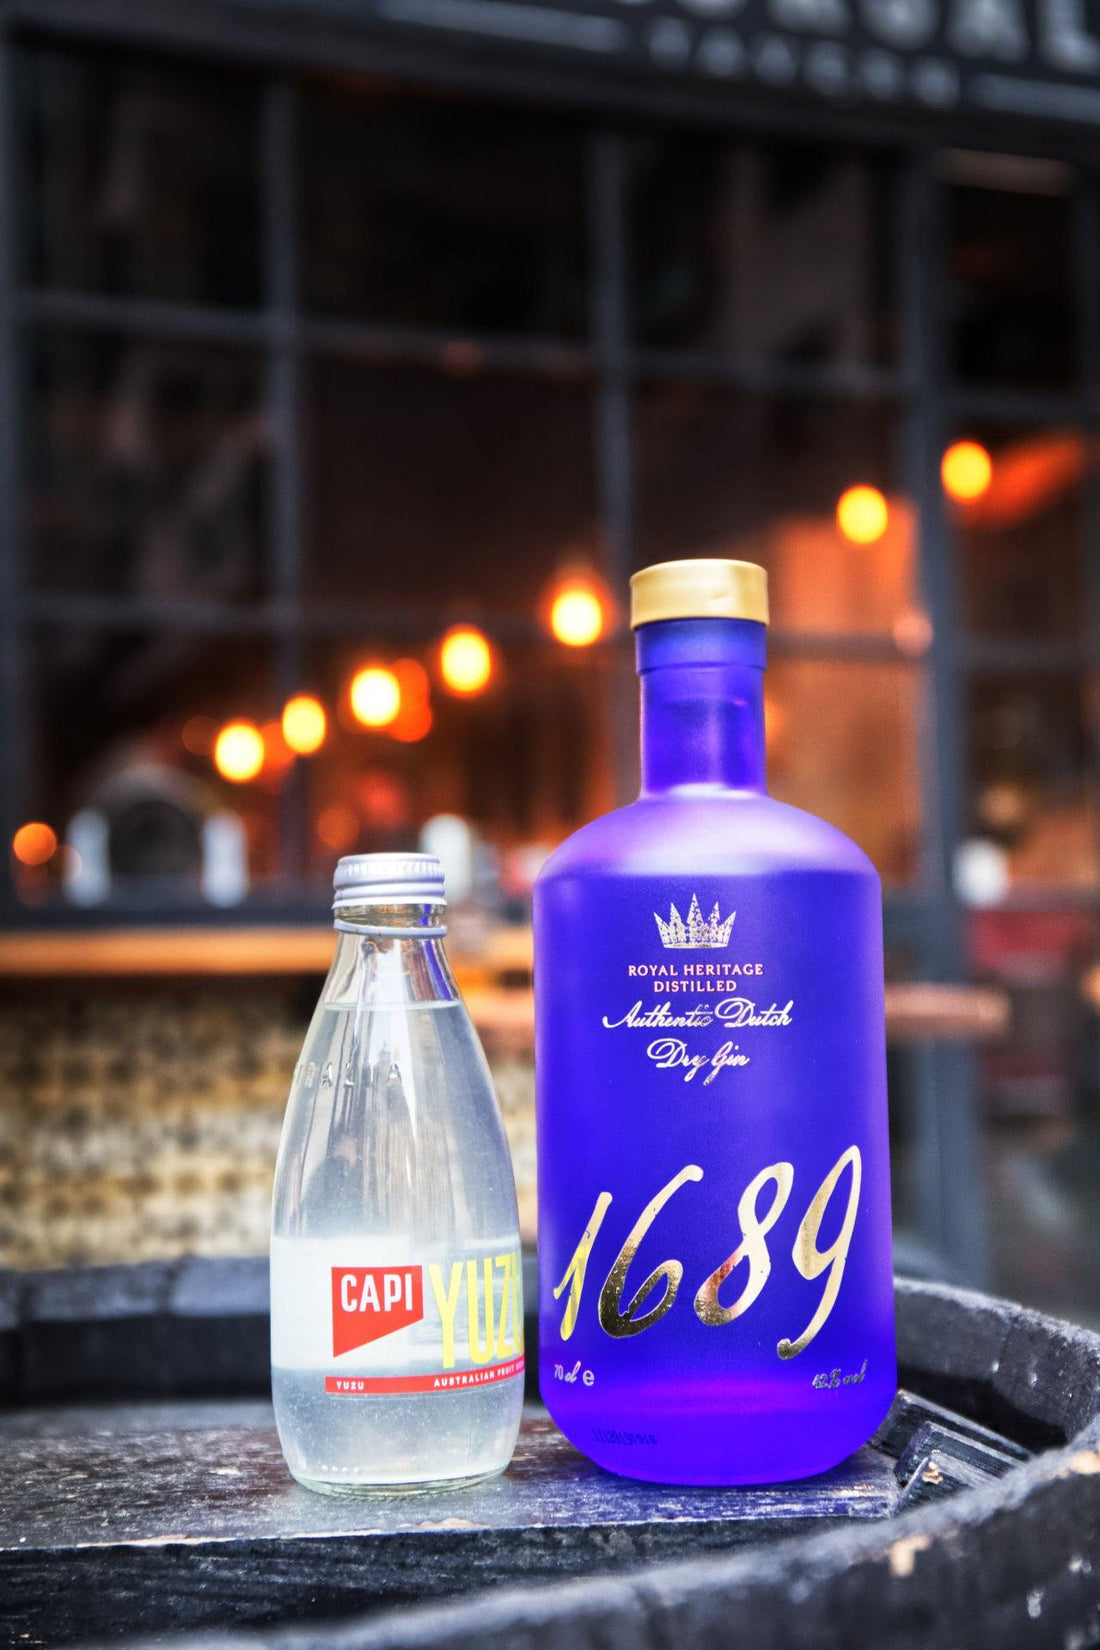 Gin 1689 - Gin's Original Recipe - Ginsanity 